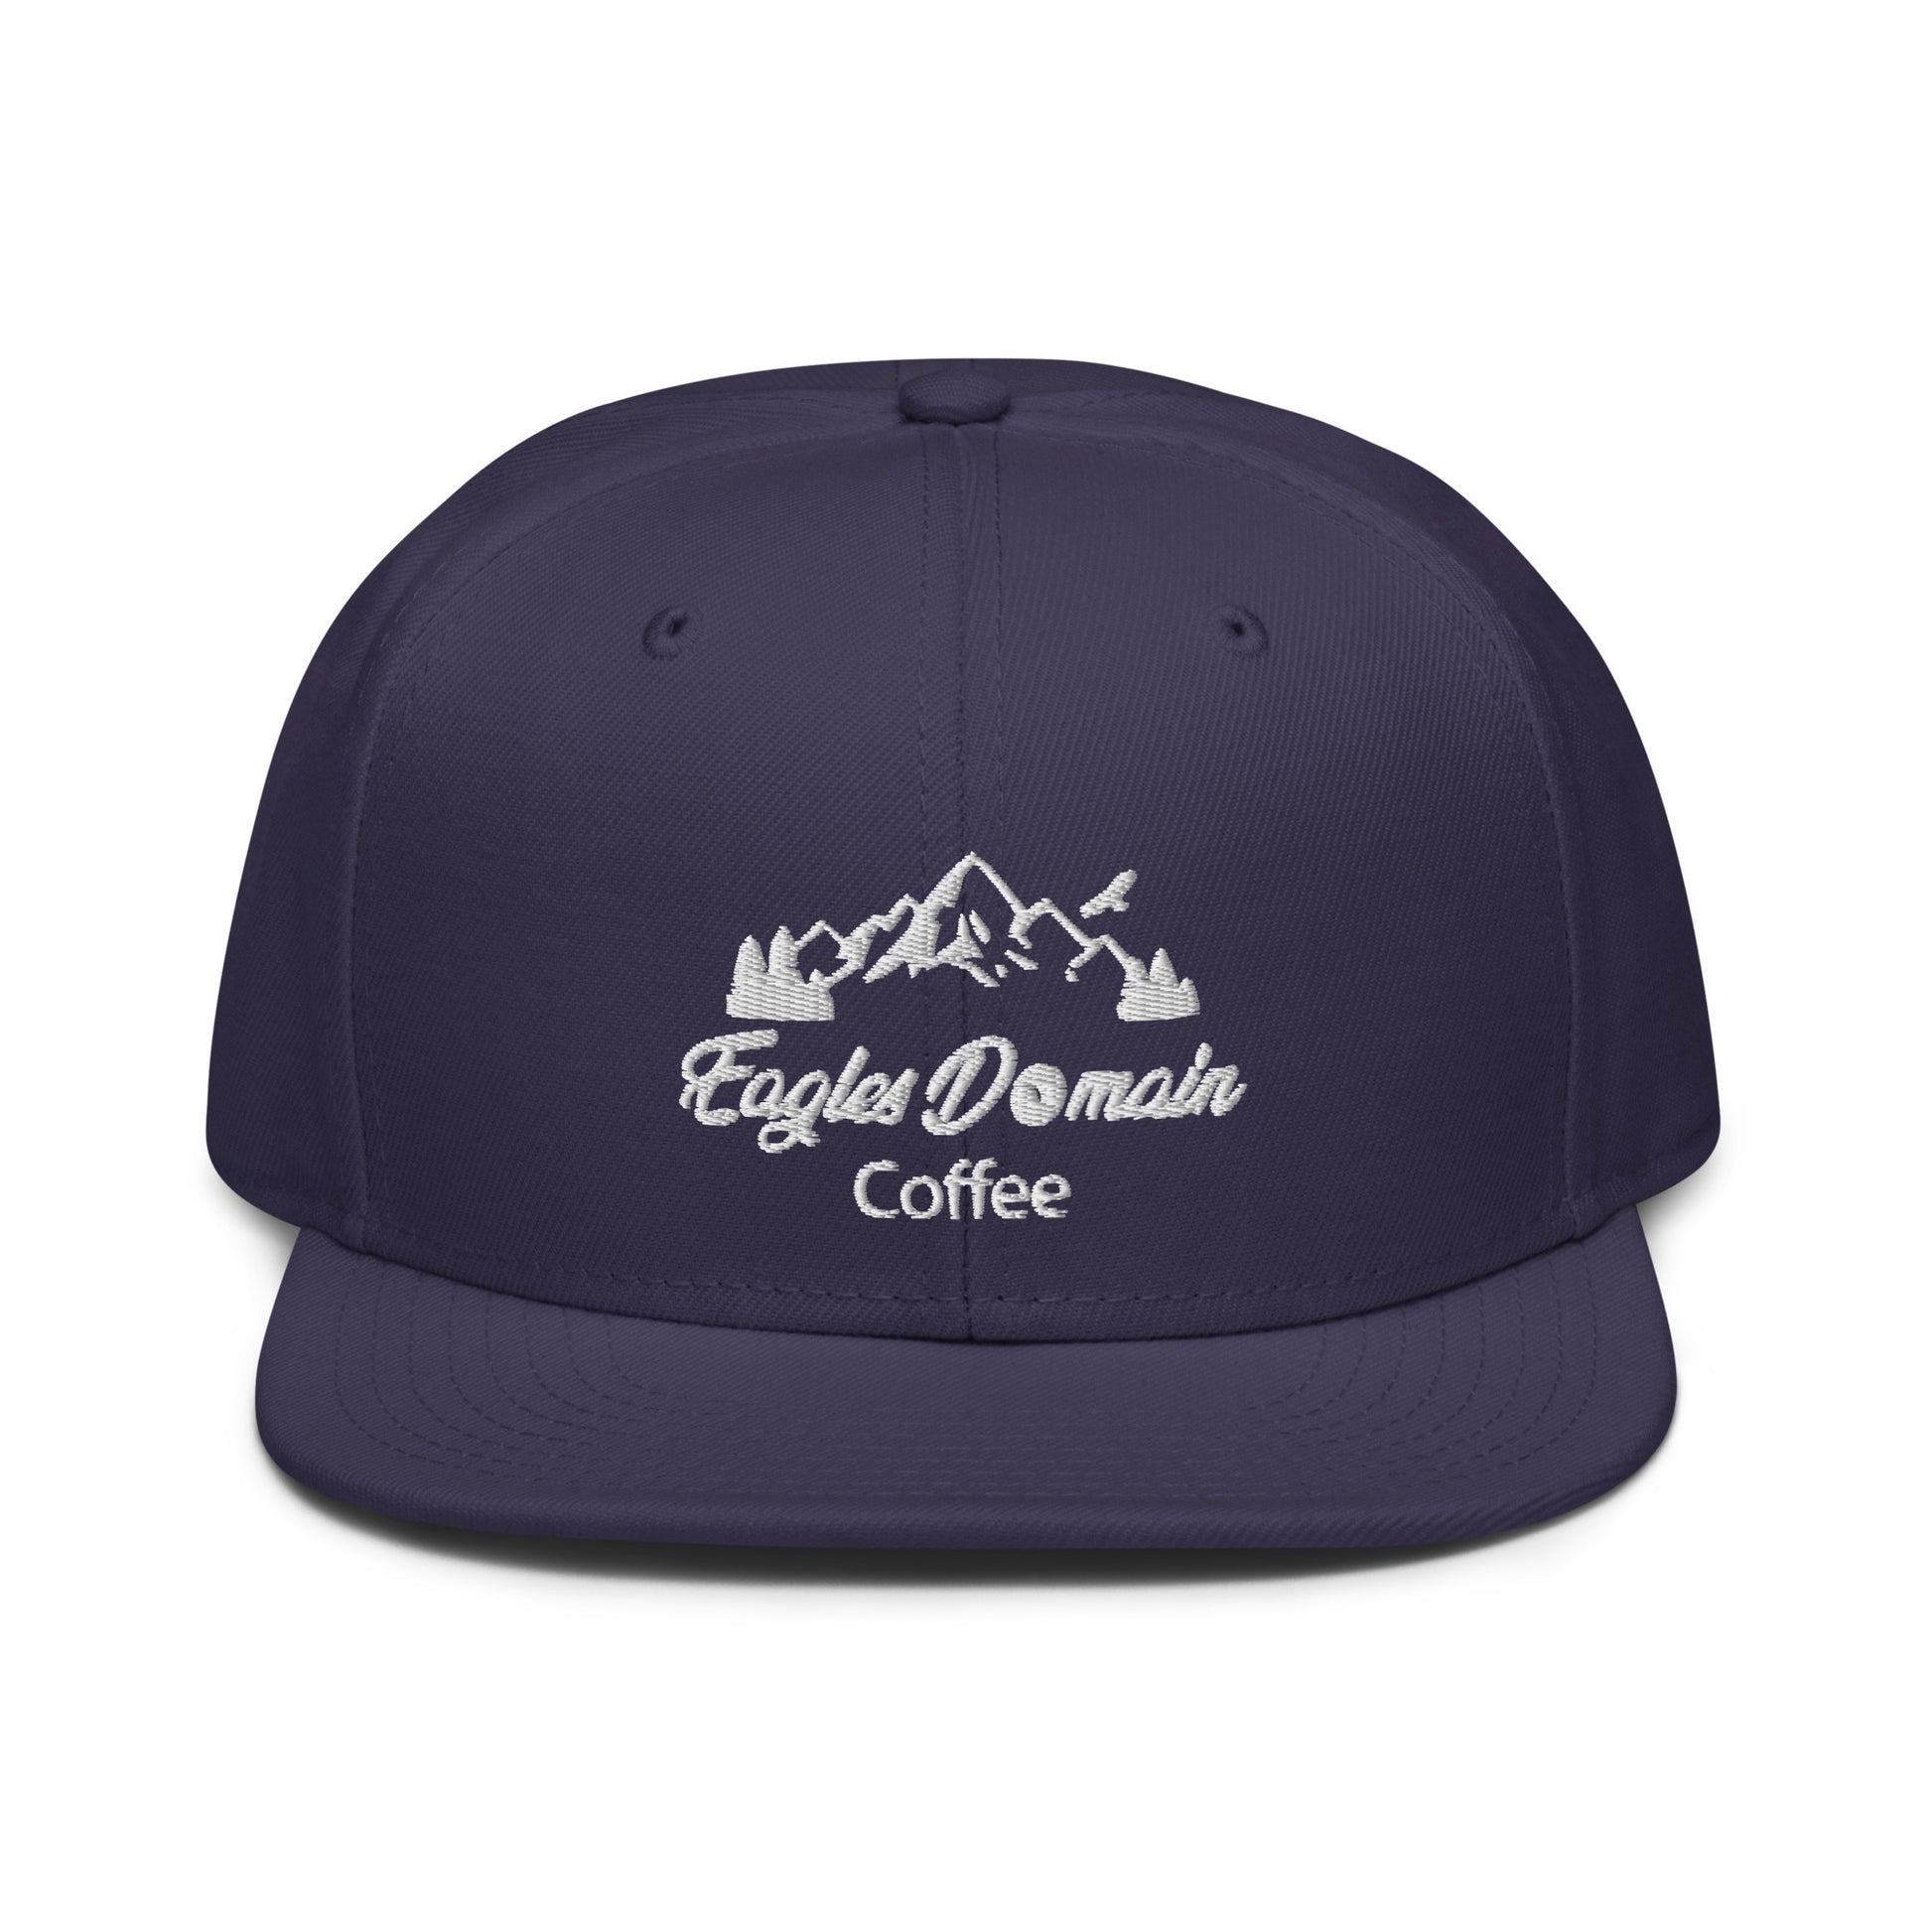 Eagles Domain Coffee Snapback Otto Hat - Eagles Domain Coffee